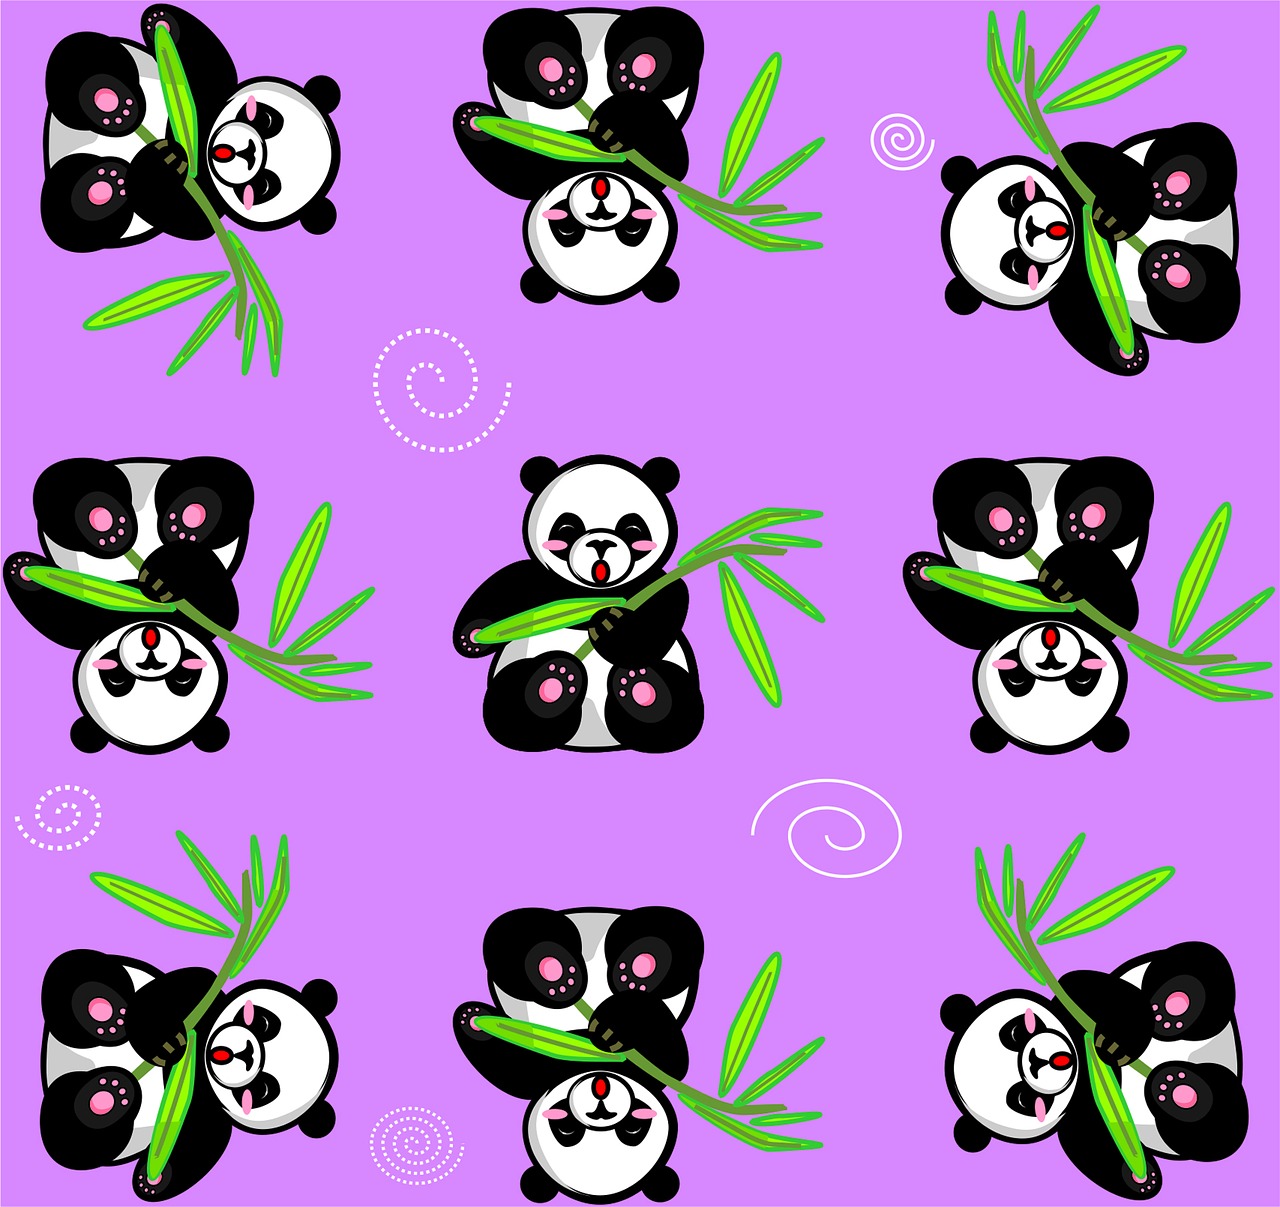 Wallpaper Gambar Anime Panda Lucu Gambar Kata